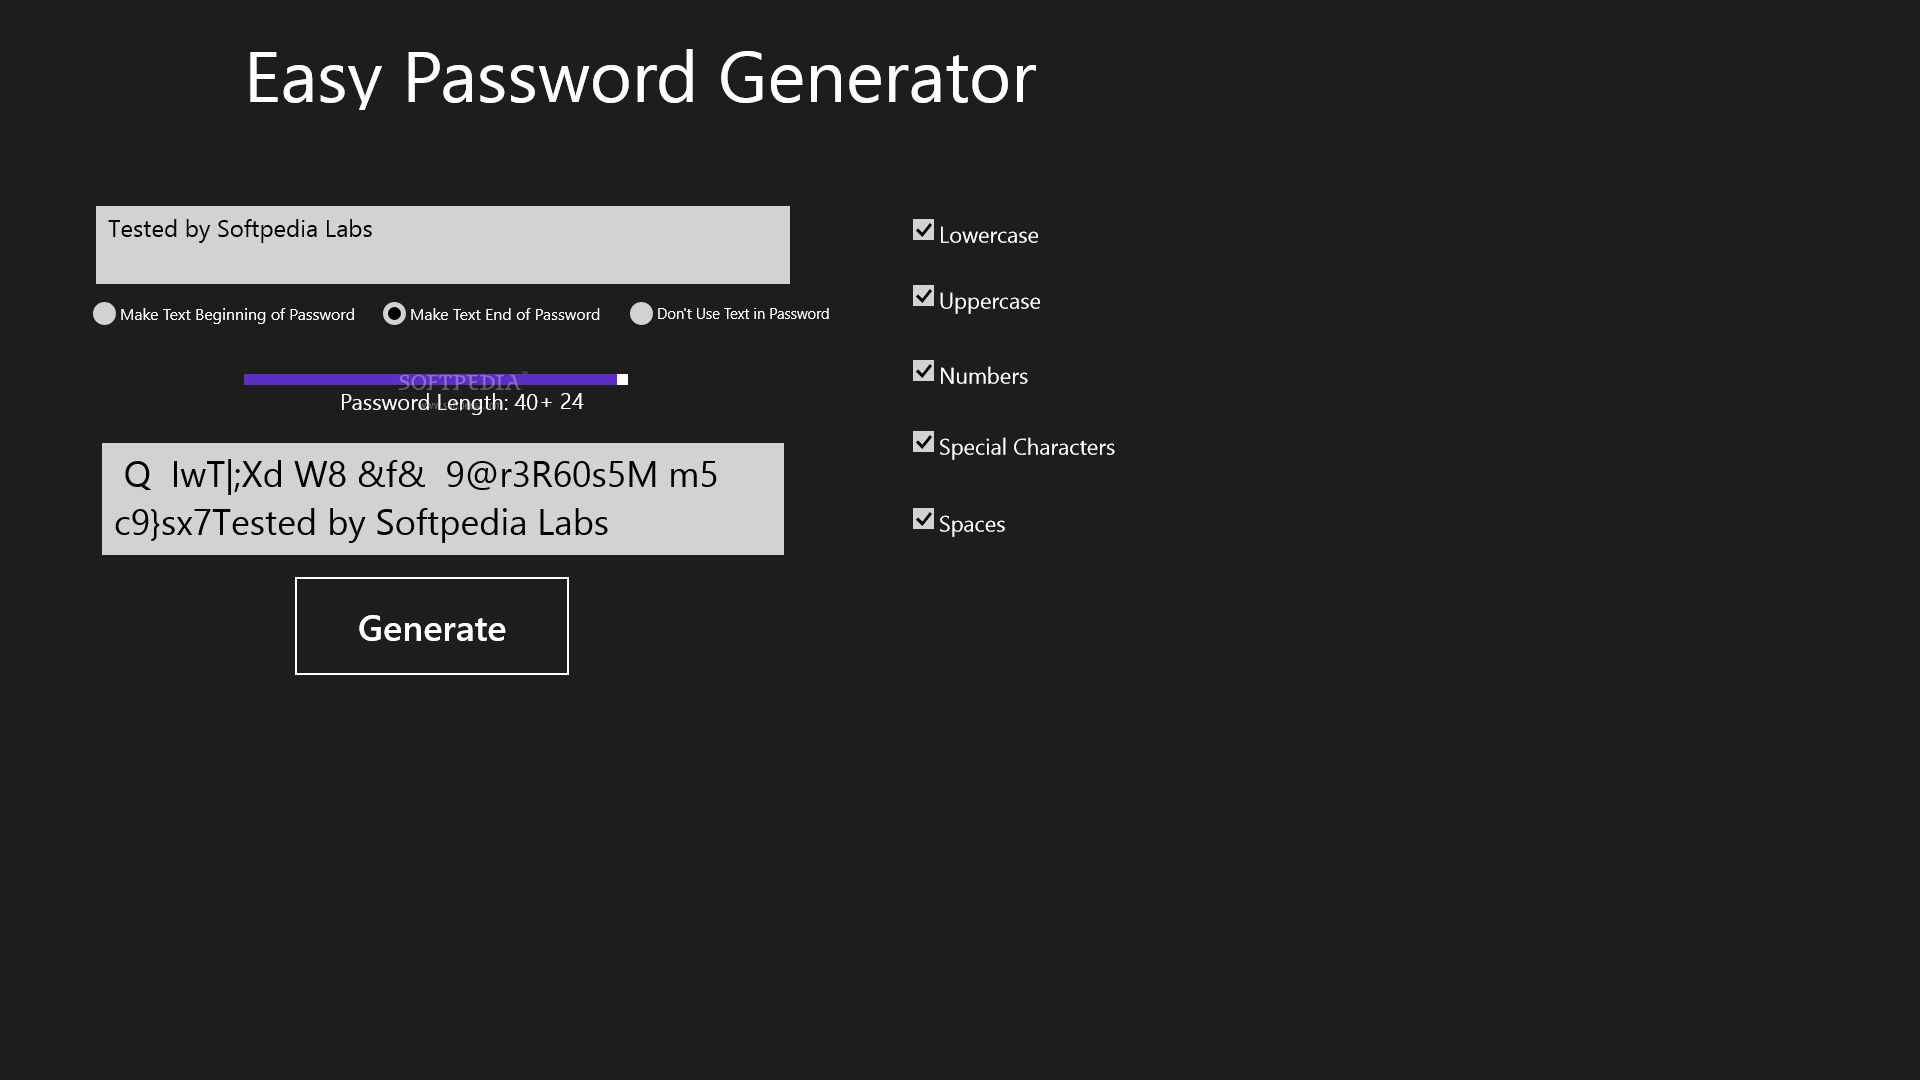 Easy Password Generator